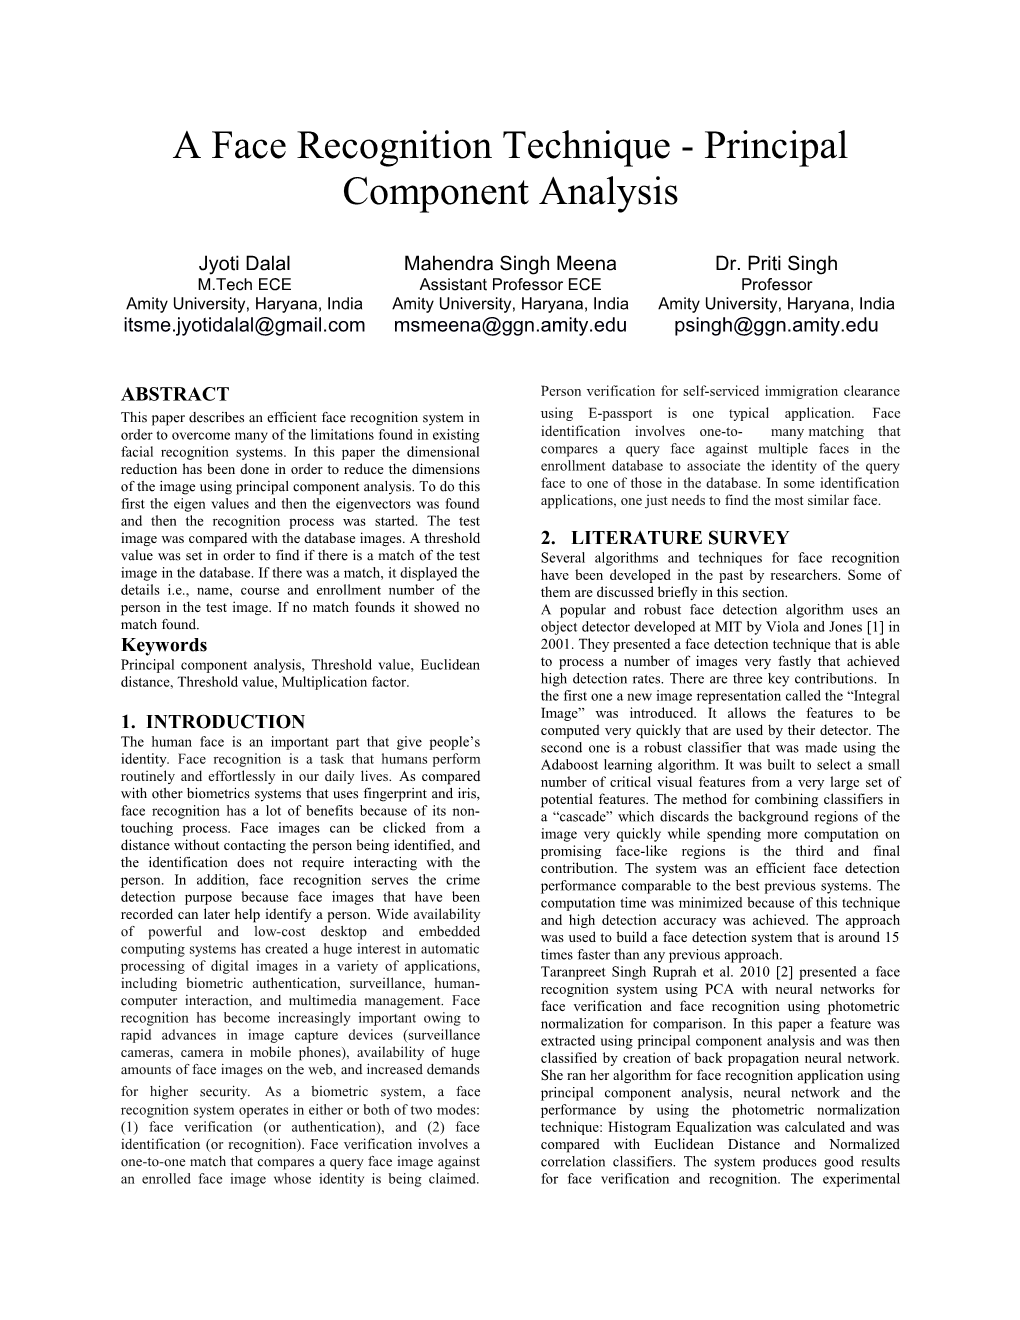 A Face Recognition Technique - Principal Component Analysis